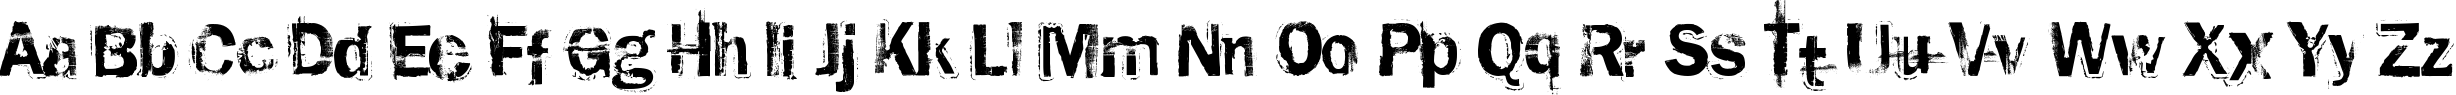 Пример написания английского алфавита шрифтом rusted plastic